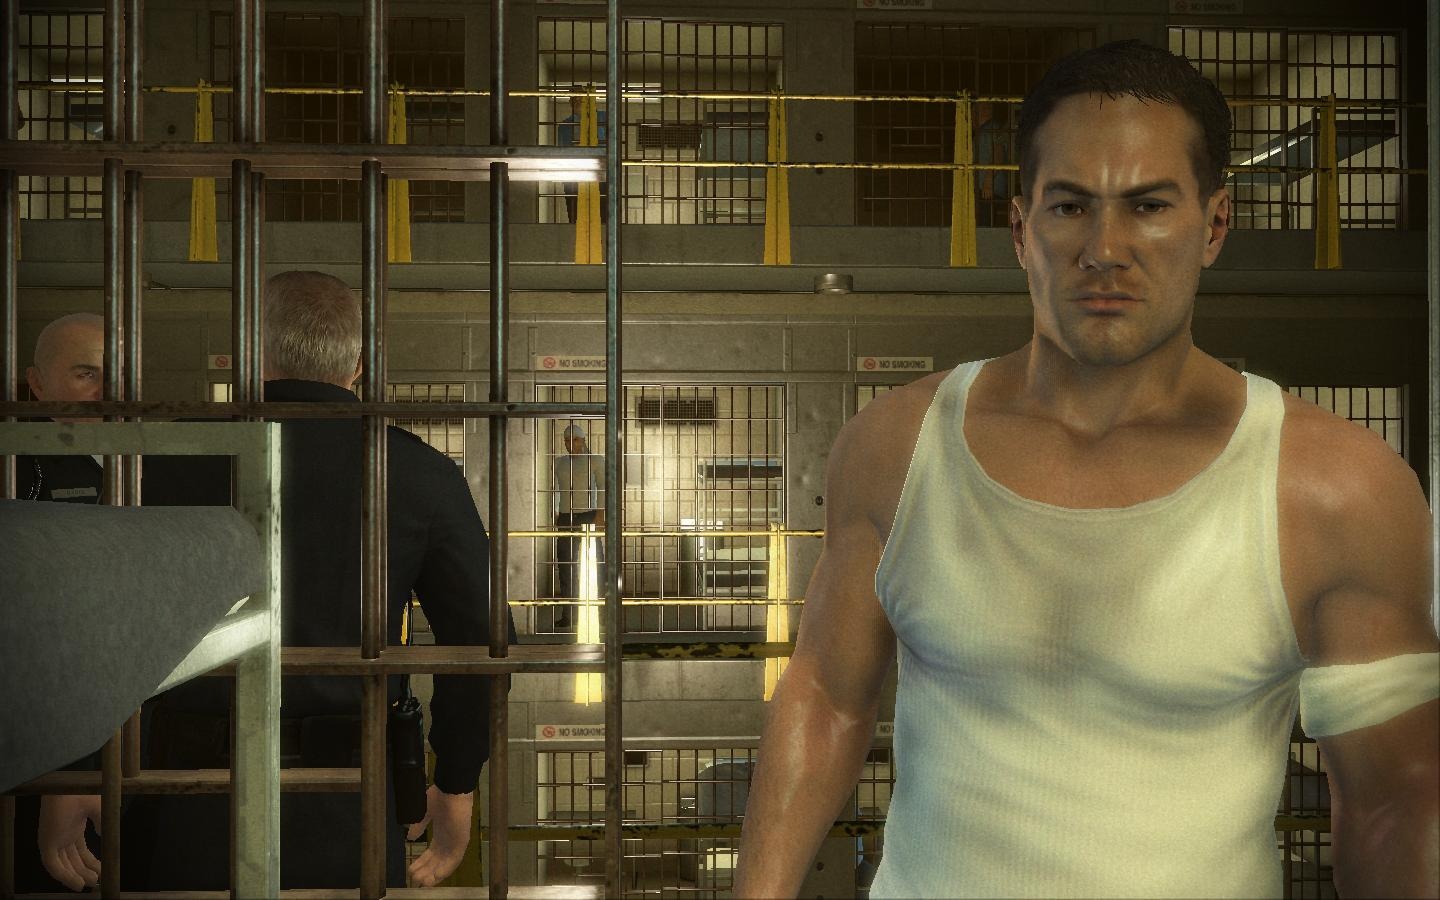 Папа играет в тюрьму. Prison Break игра. Присон брейк игра. Prison Break: the Conspiracy (2010).